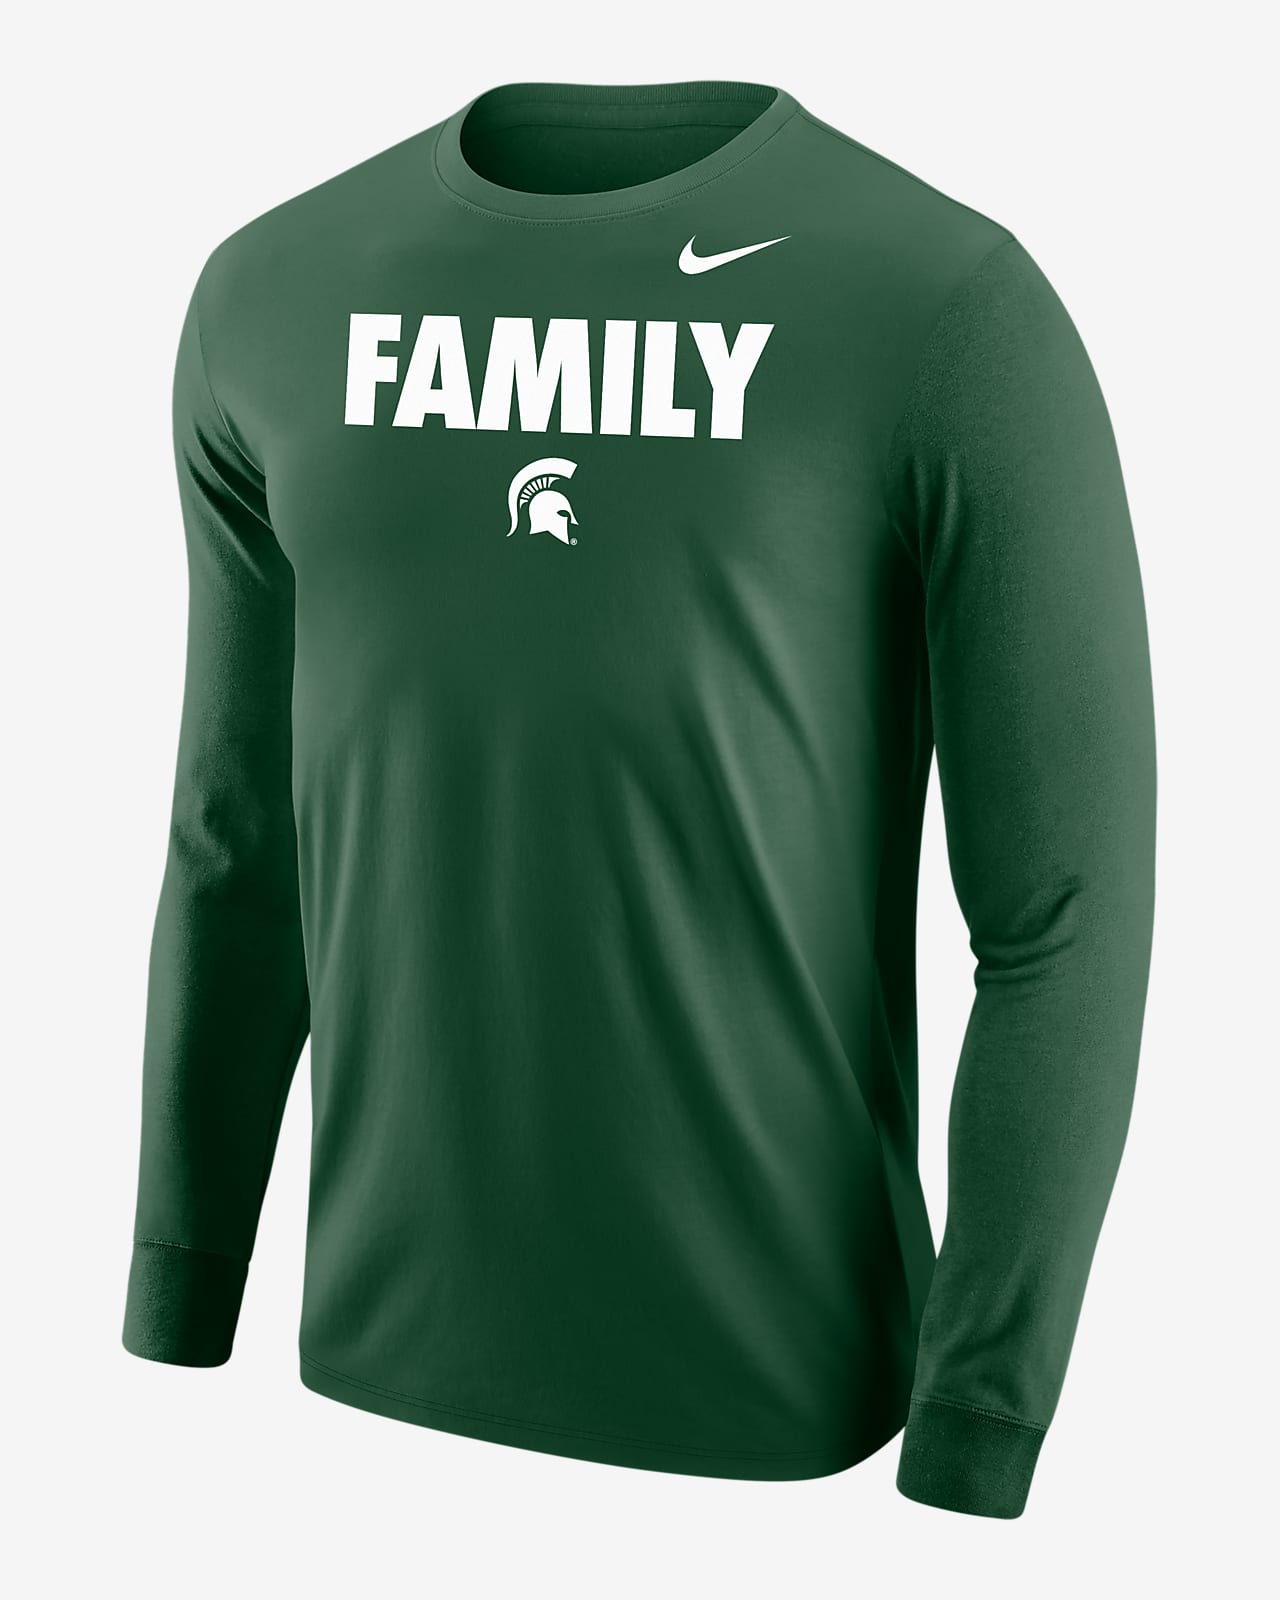 Michigan State Men's Nike College Long-Sleeve T-Shirt